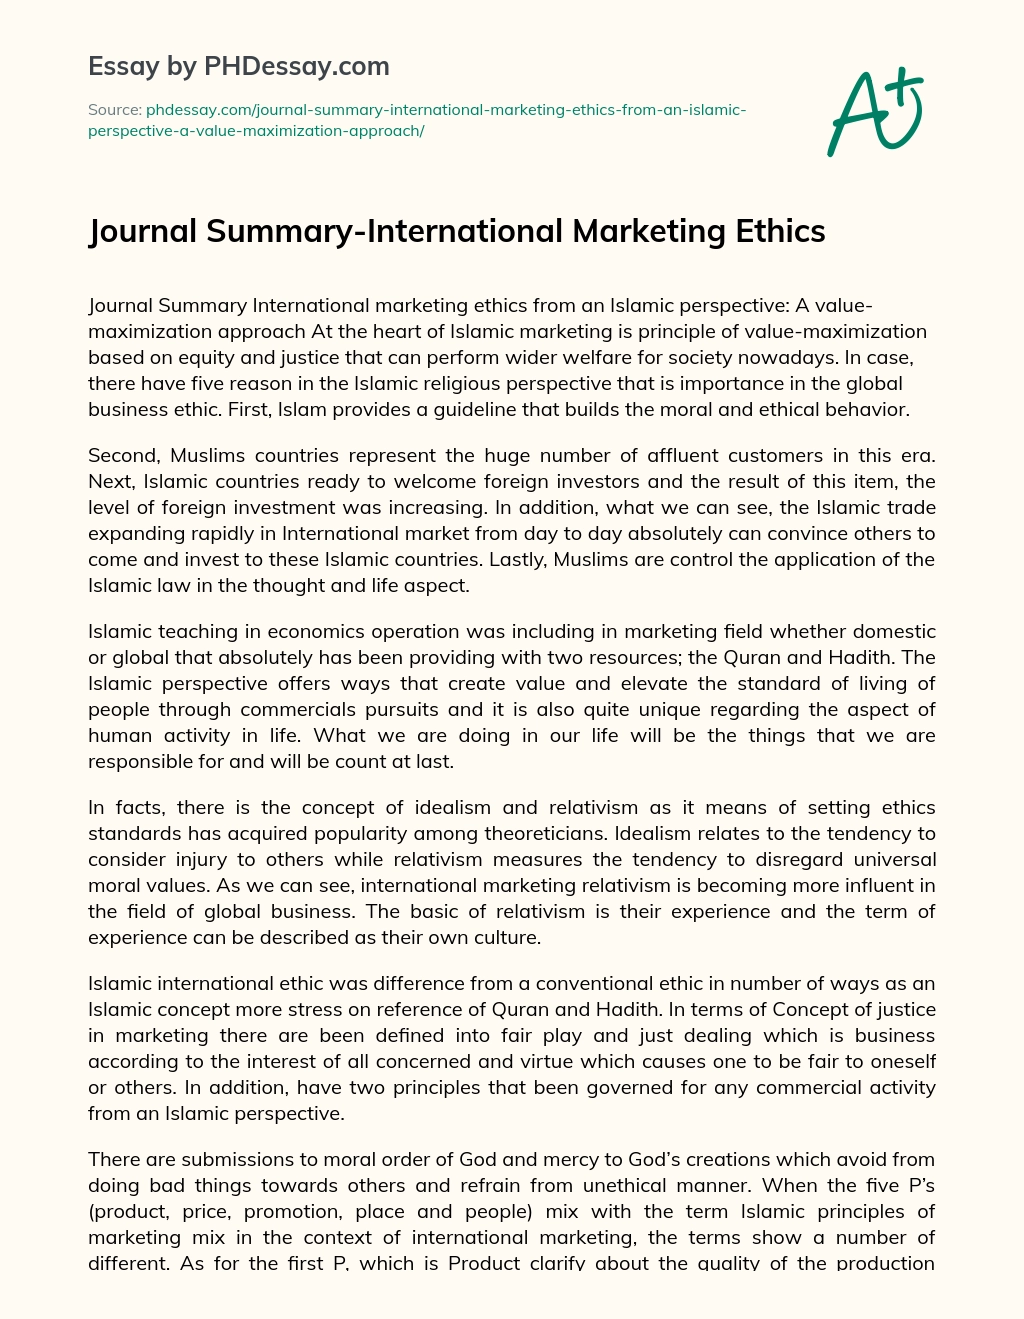 Journal Summary-International Marketing Ethics essay